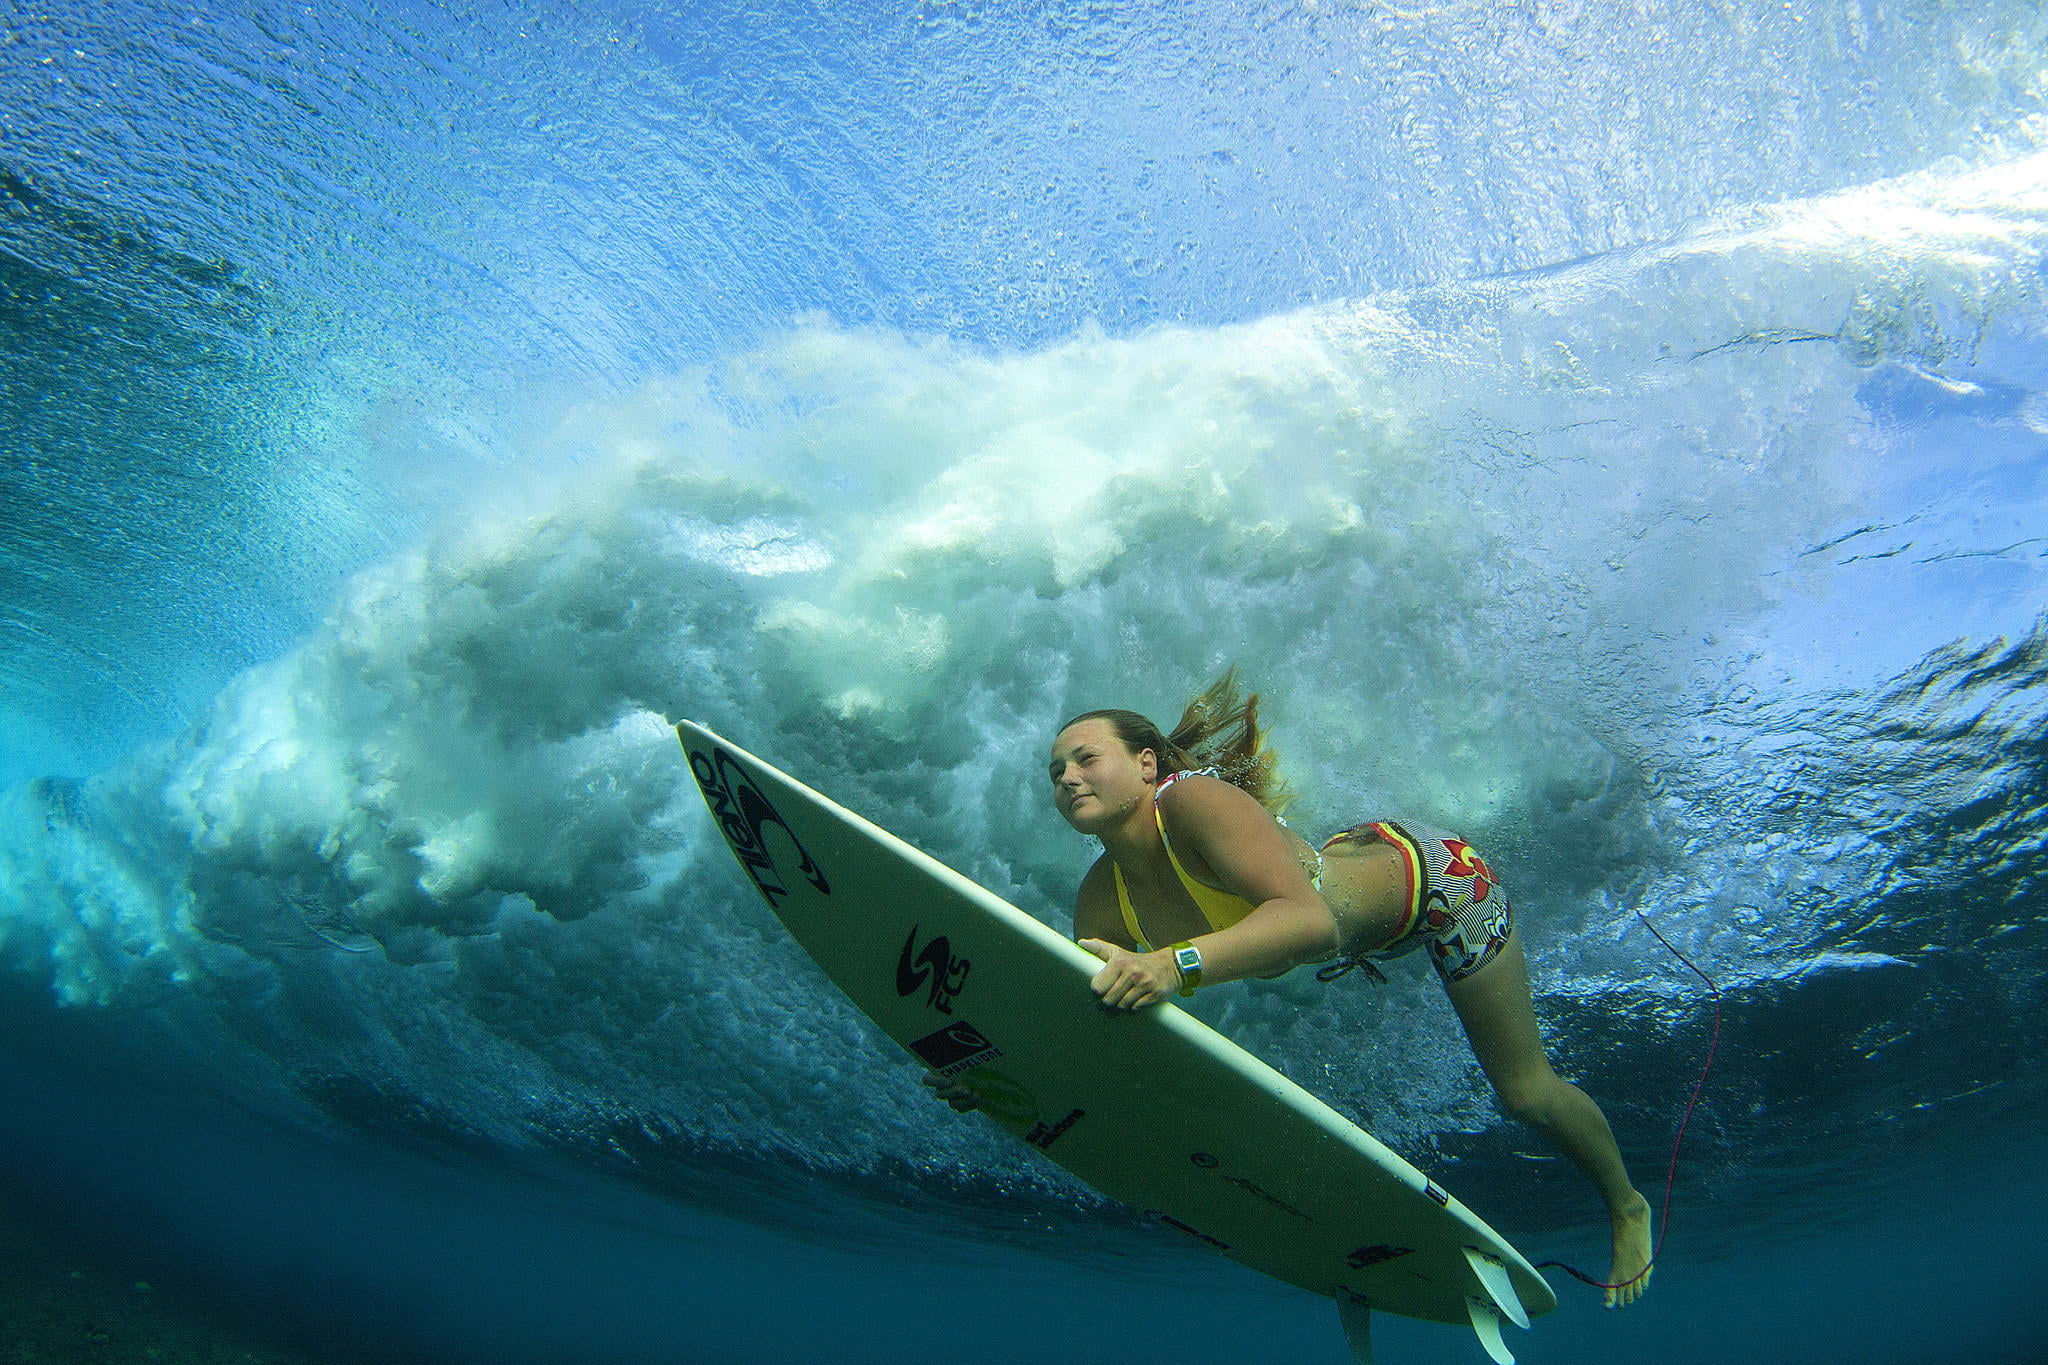 white surfboard, surfing, under water, surfer, sea, sport, aquatic sport